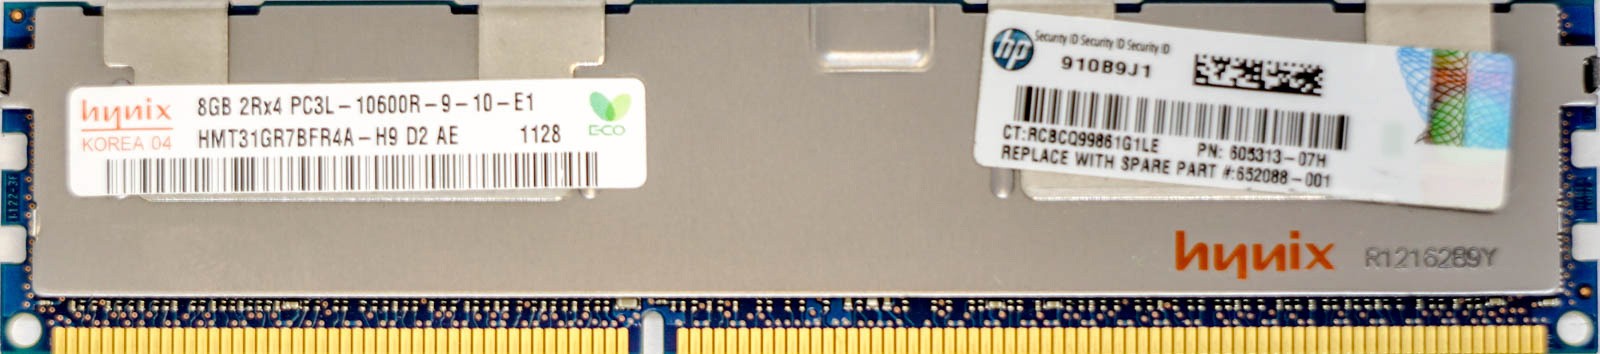 HP (605313-07H) - 8GB PC3L-10600R (DDR3-1333Mhz, 2RX4)